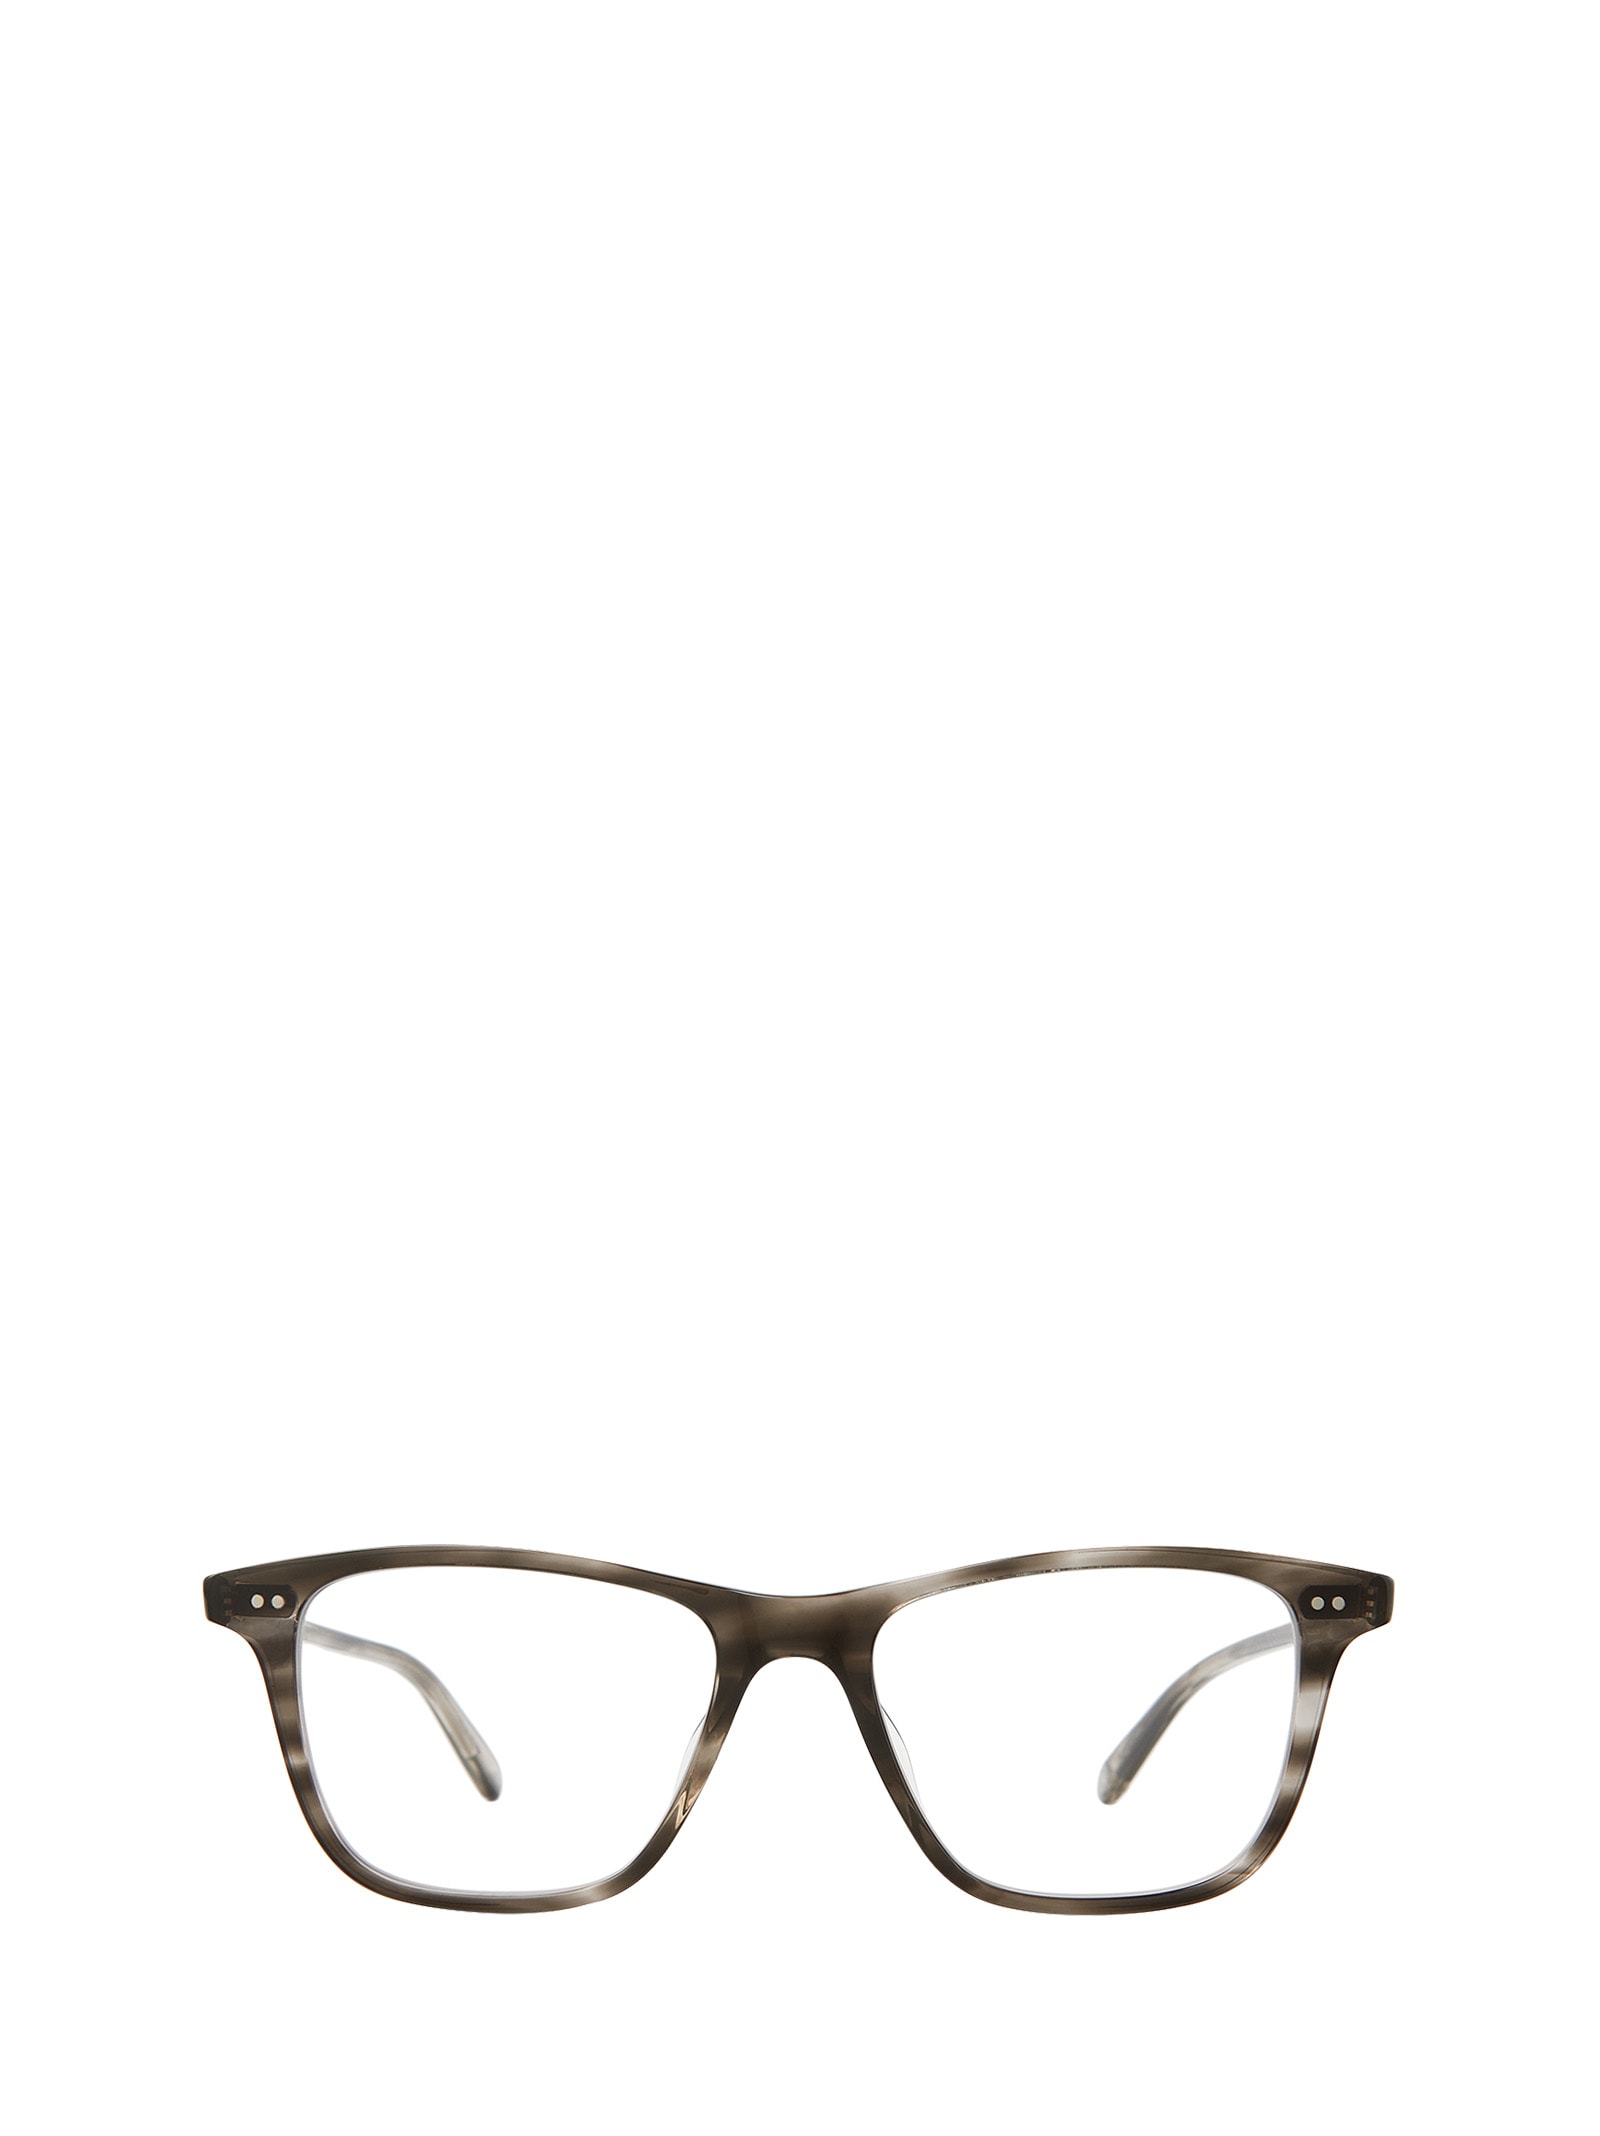 Hayes Black Sleet Tortoise Glasses